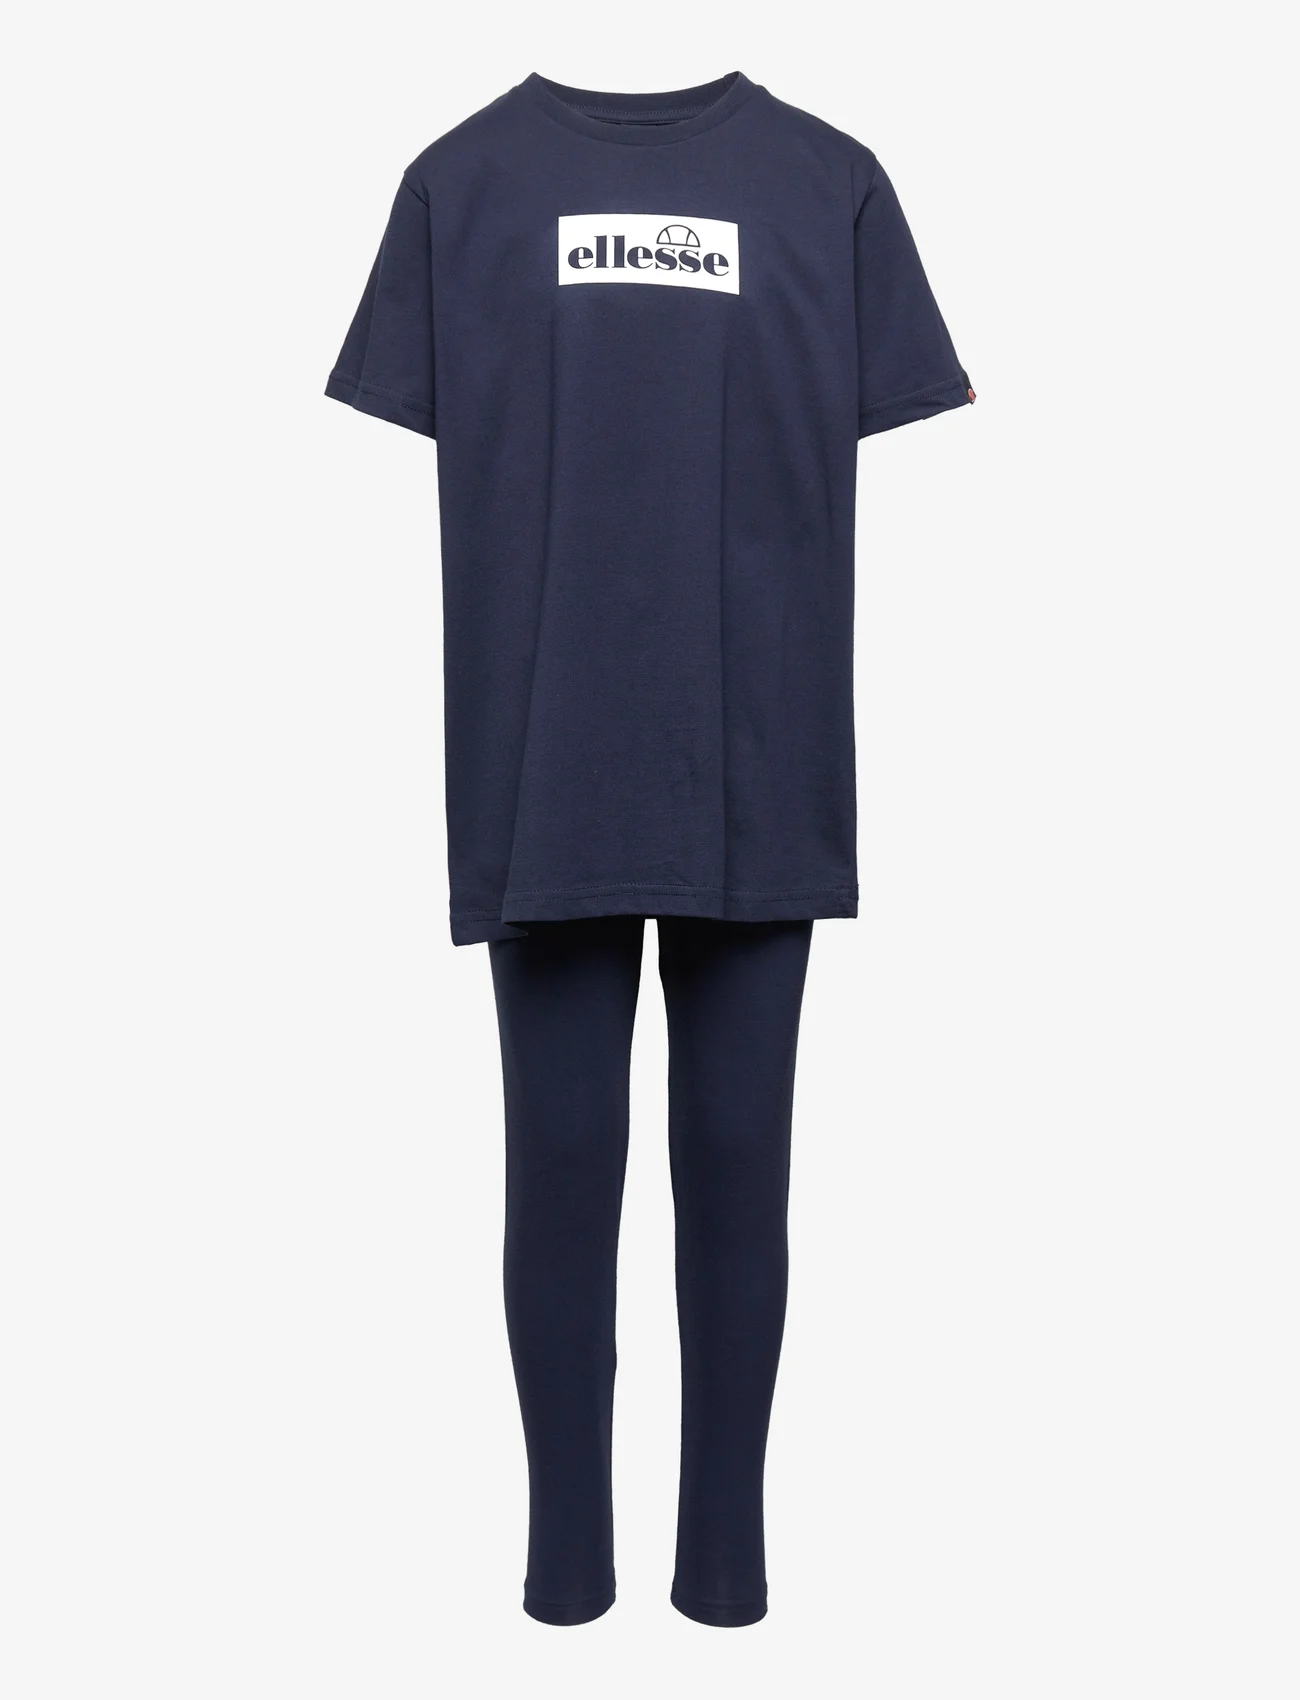 Ellesse - EL REALTA JNR LEGGING SET - sets mit kurzärmeligem t-shirt - navy - 0